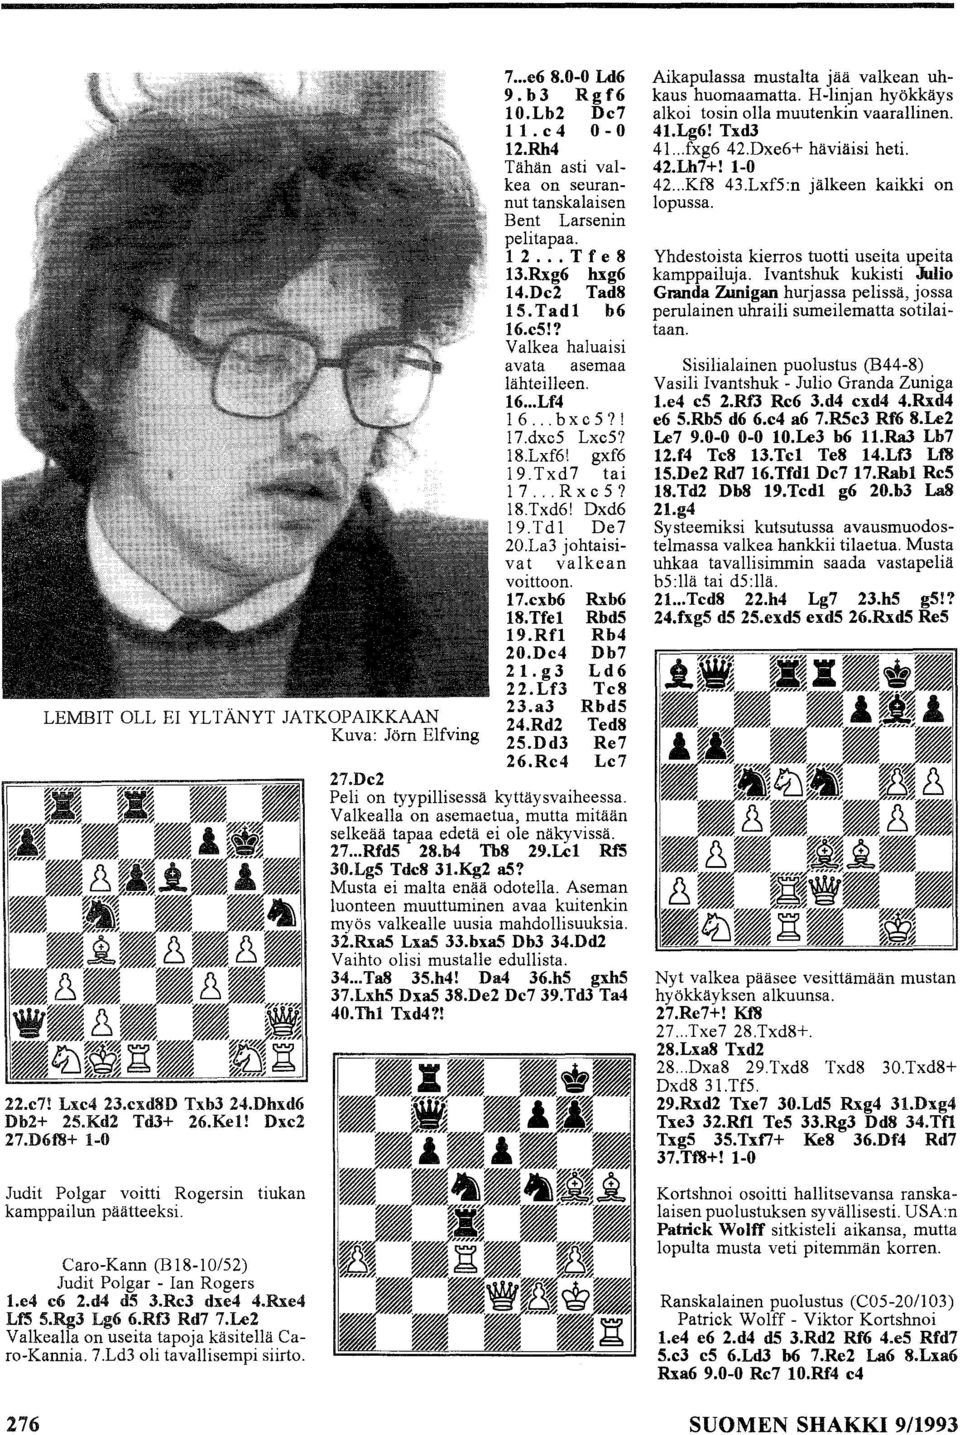 .. e6 8.0-0 Ld6 9.b3 Rgf6 10.Lb2 Dc7 l1.c4 0-0 12.Rh4 Tähän asti valkea on seurannut tanskalaisen Bent Larsenin pelitapaa. 12... Tfe8 13.Rxg6 hxg6 14.Dc2 Tad8 15.Tadl b6 16.c5!